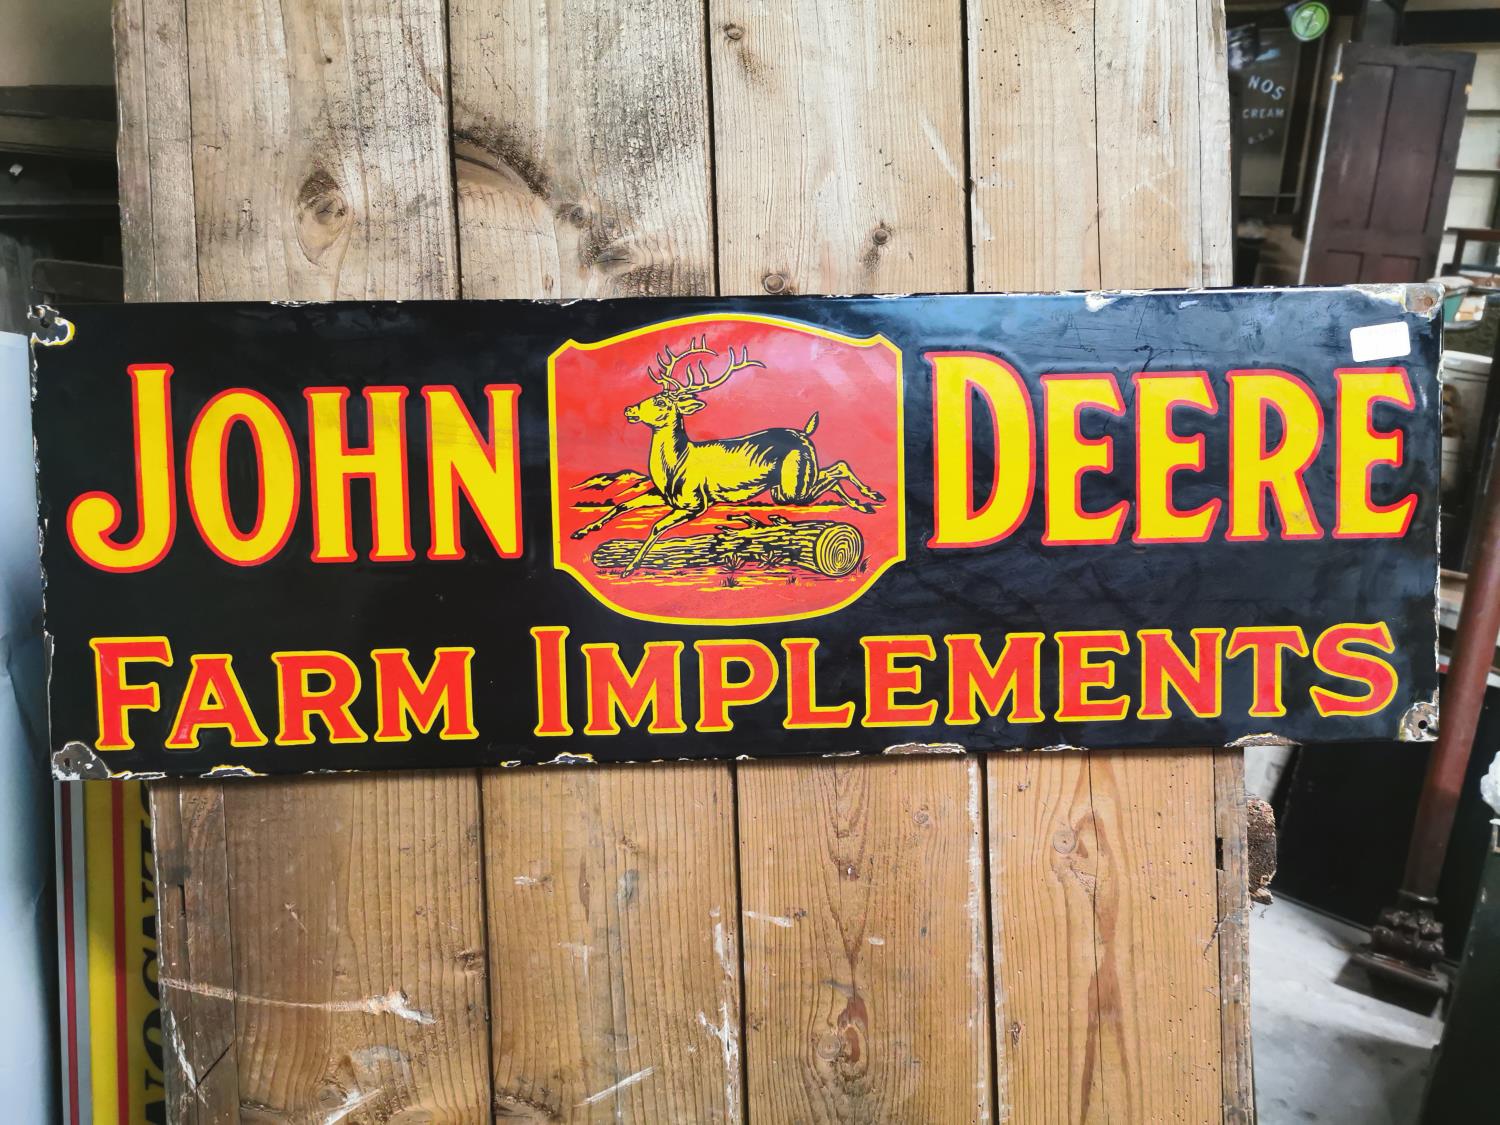 John Deere enamel advertising sign.